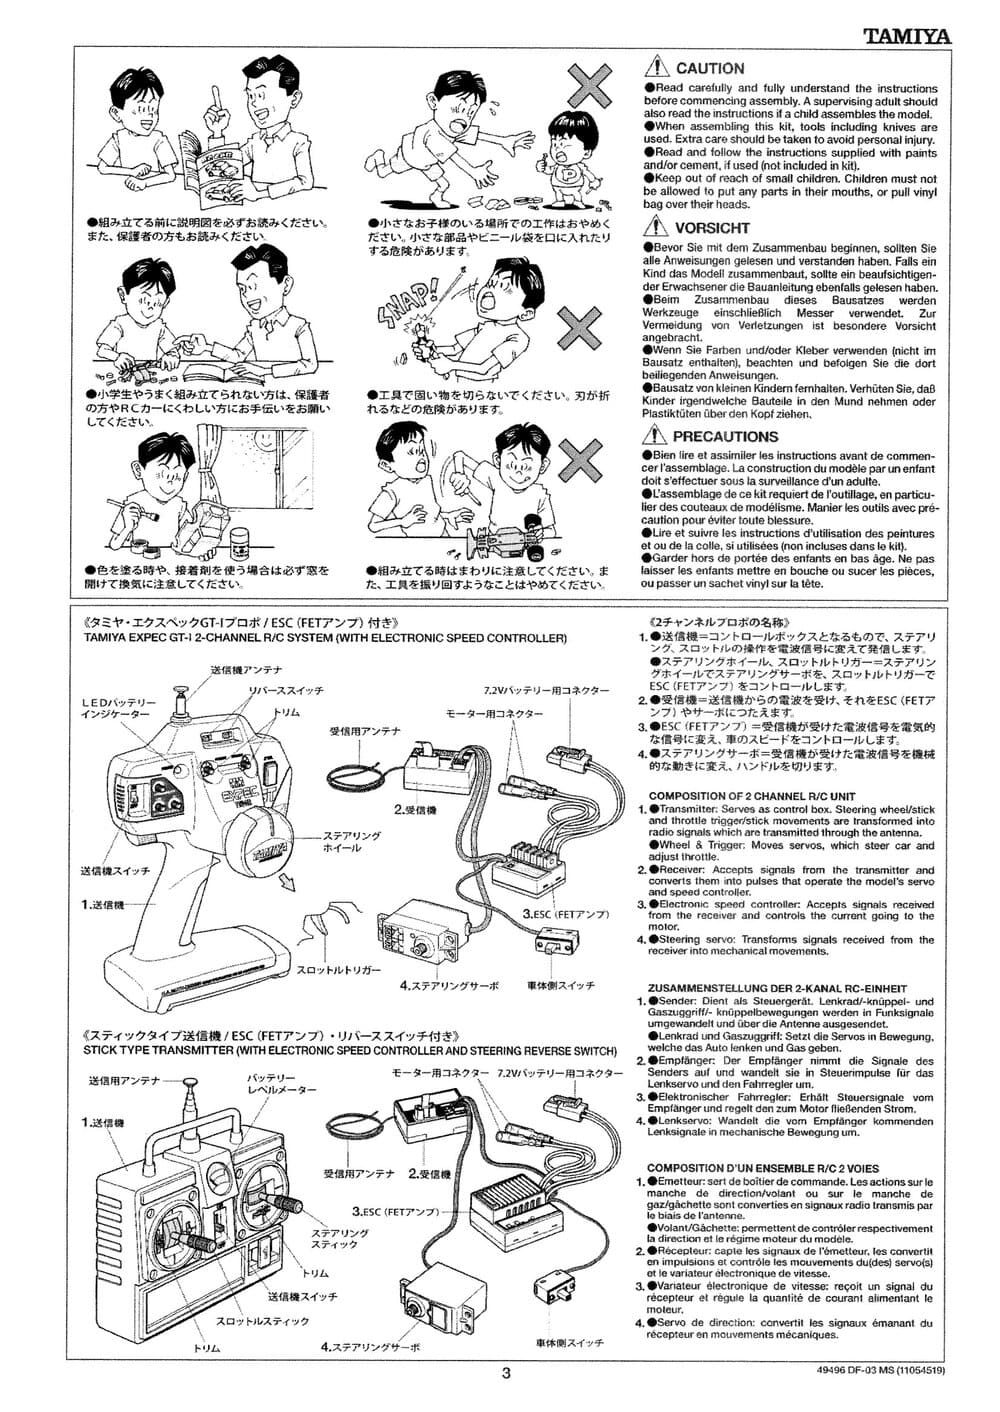 Tamiya - DF-03 MS Chassis Chassis - Manual - Page 3